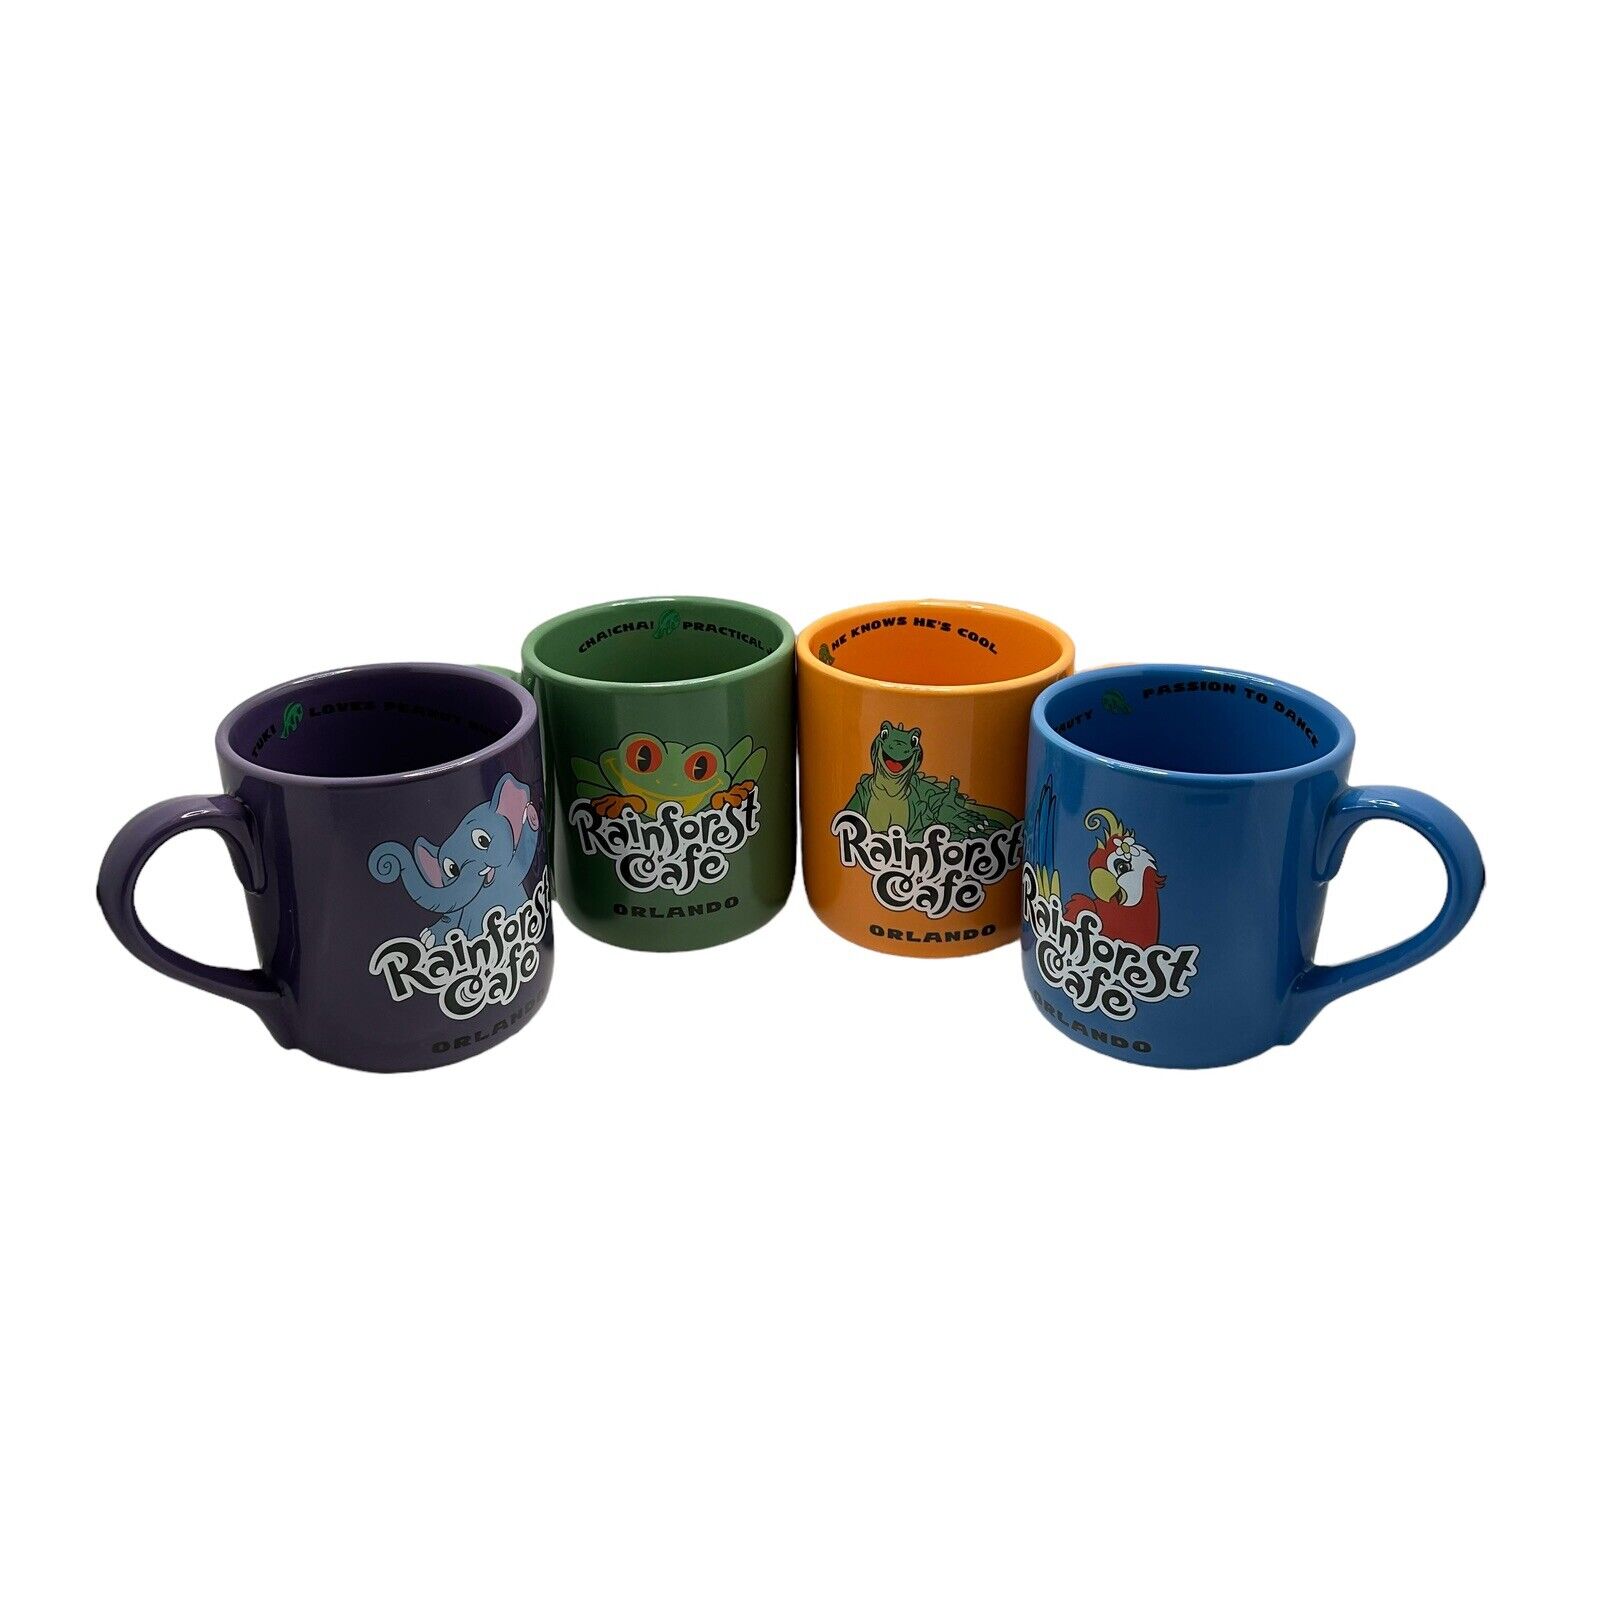 VTG 1999 Rainforest Cafe Coffee Mugs Cups Set of 4 IGGY, CHA CHA, RIO, & TUKI